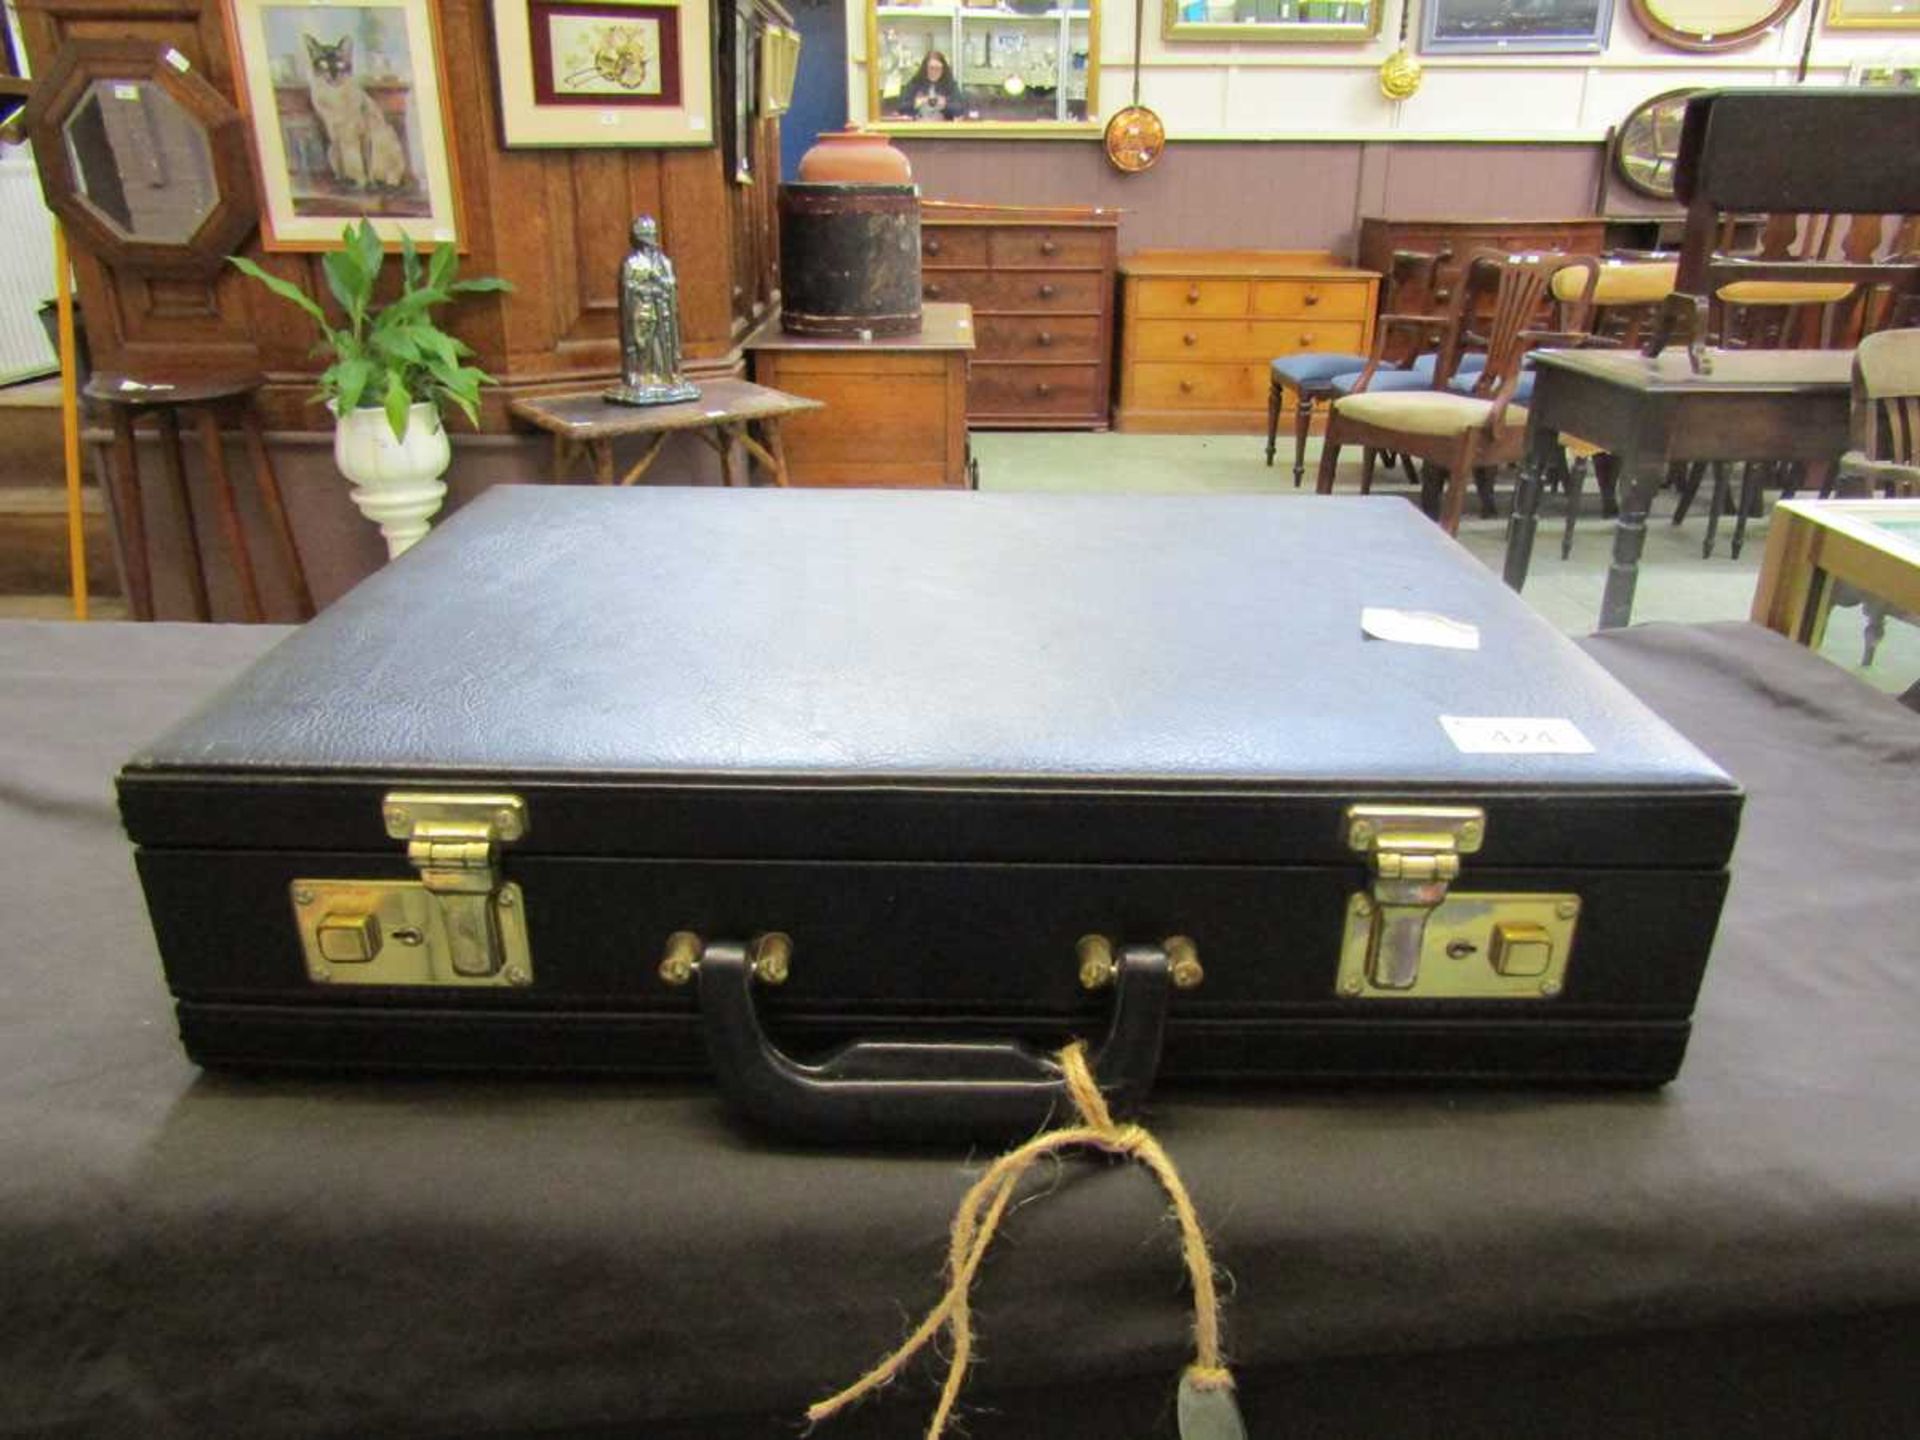 A black attaché case